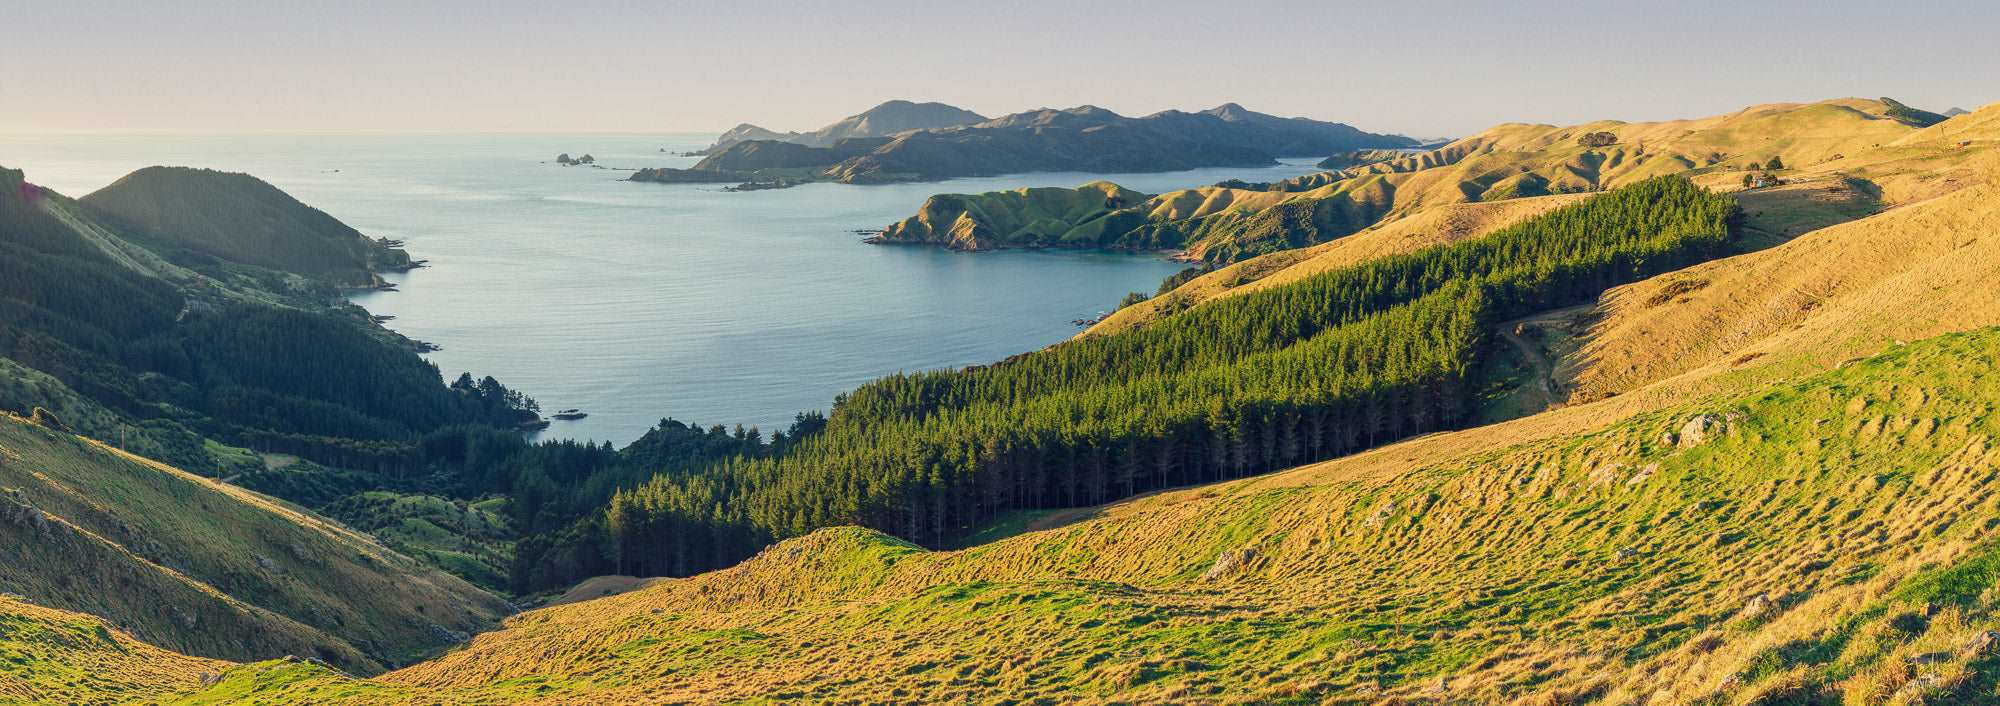 Dumont's French Pass Sunset Odyssey - by Award Winning New Zealand Landscape Photographer Stephen Milner